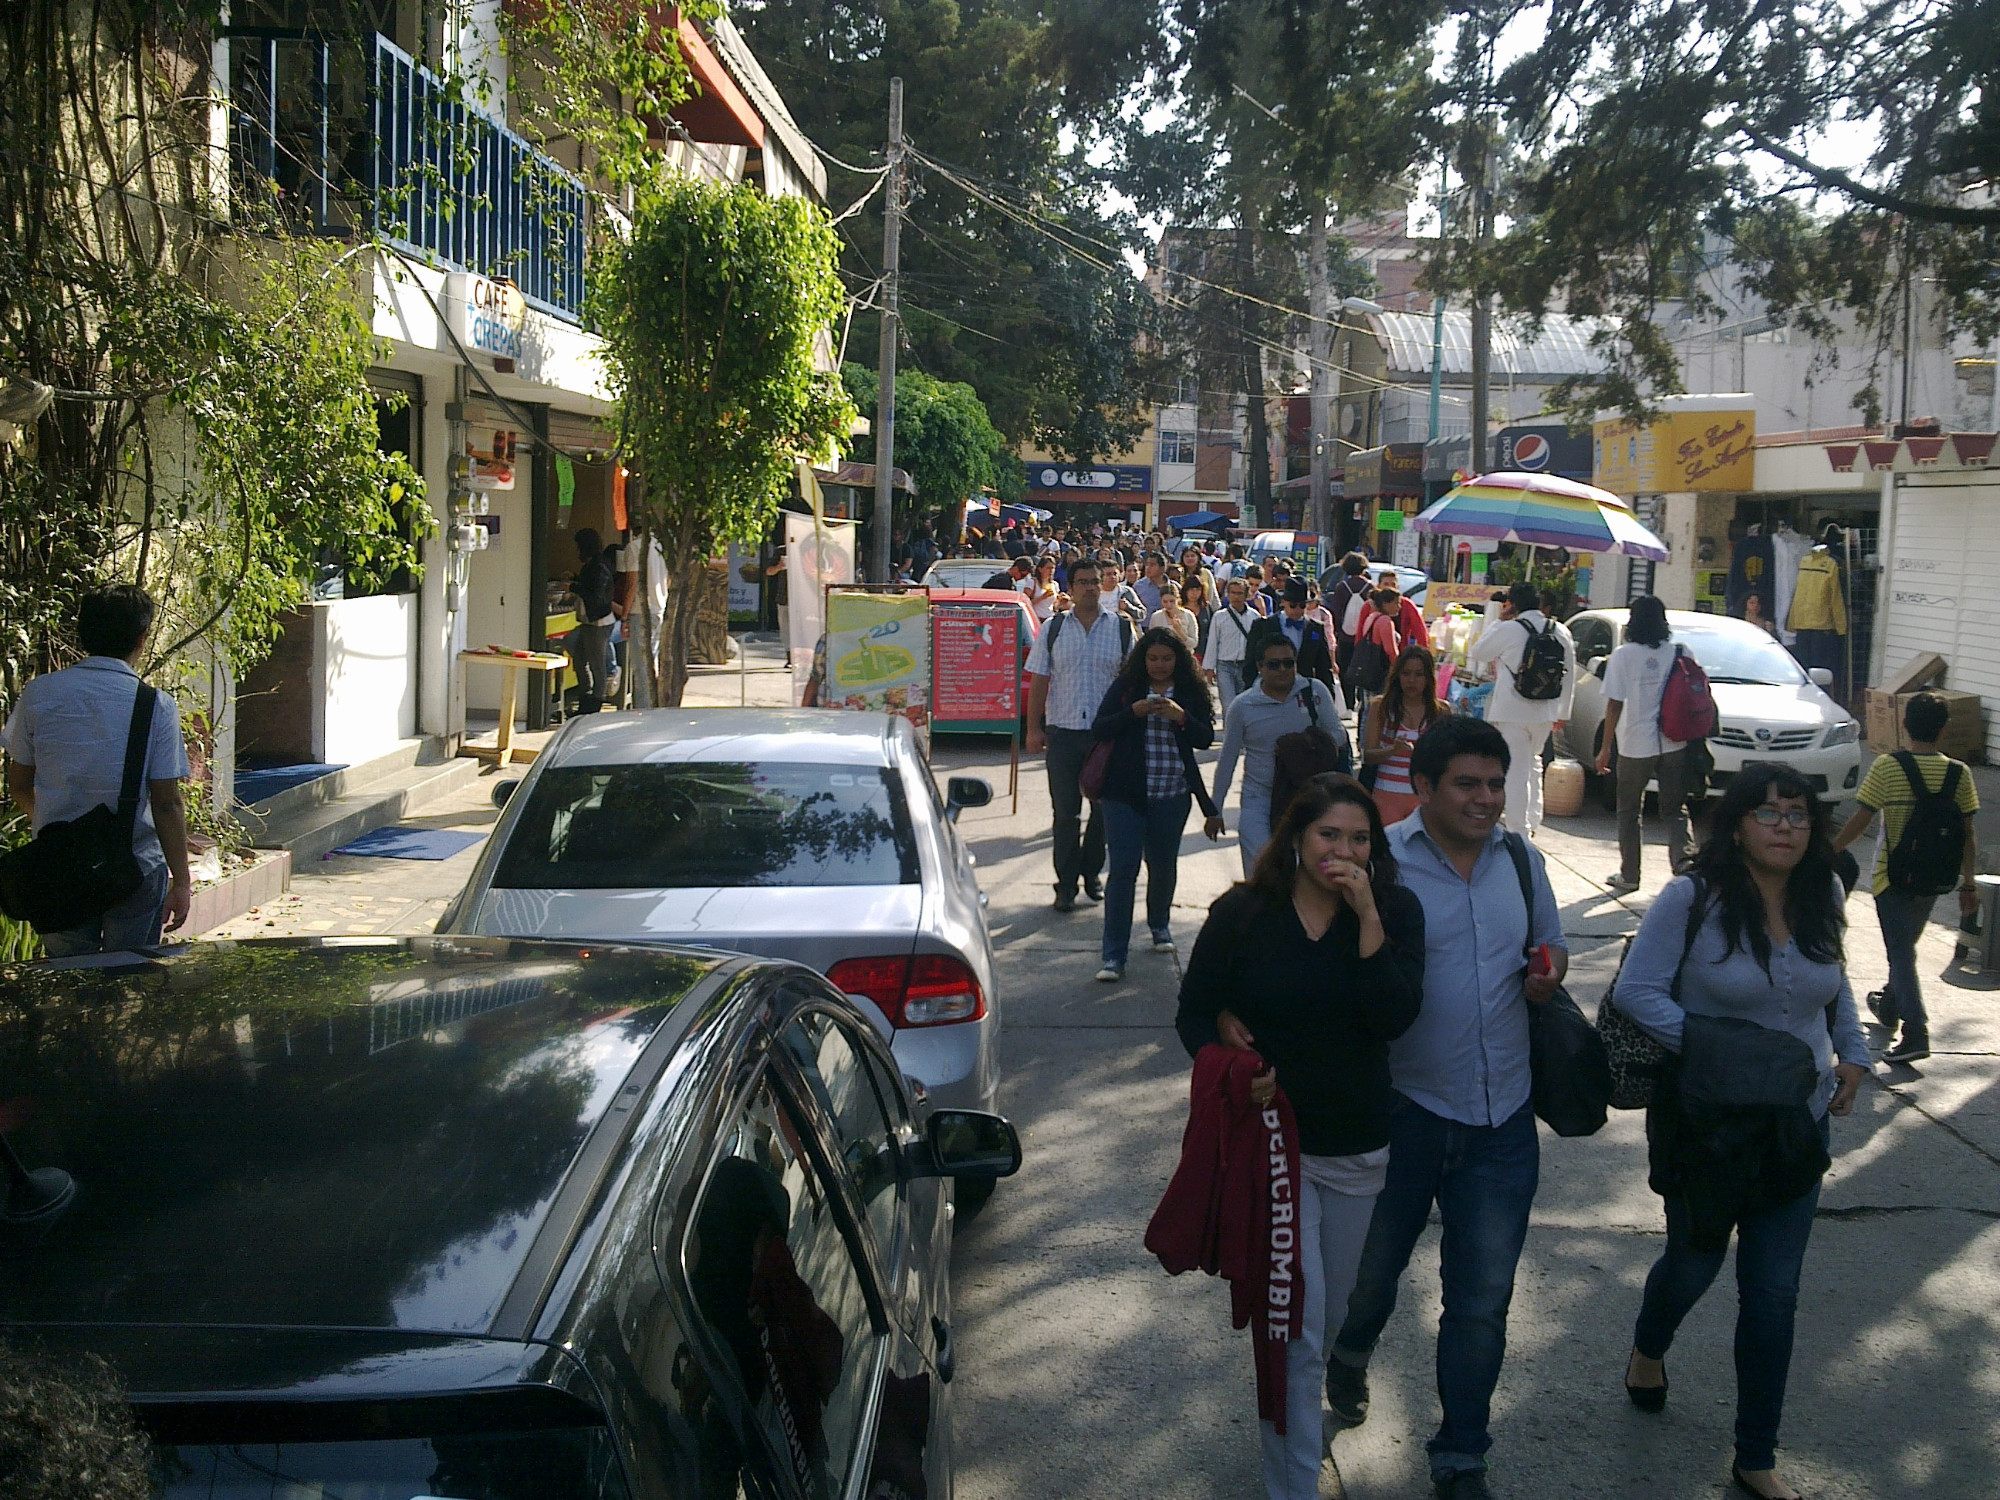 Copilco, Mexico City